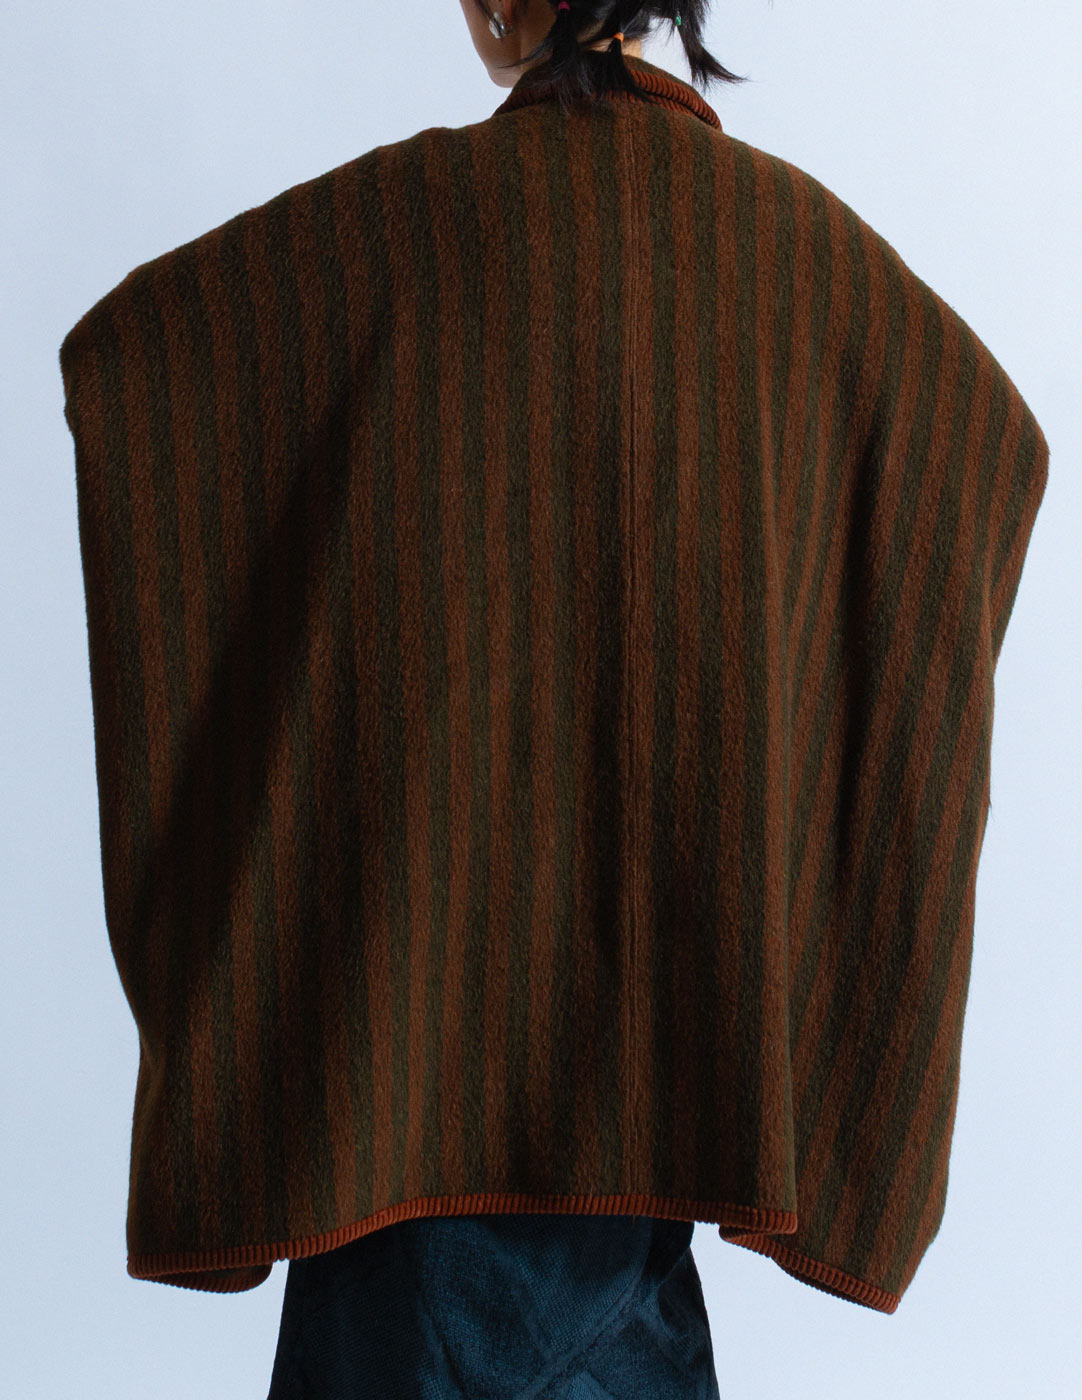 Gianni Versace vintage Maillard cape wool coat back detail